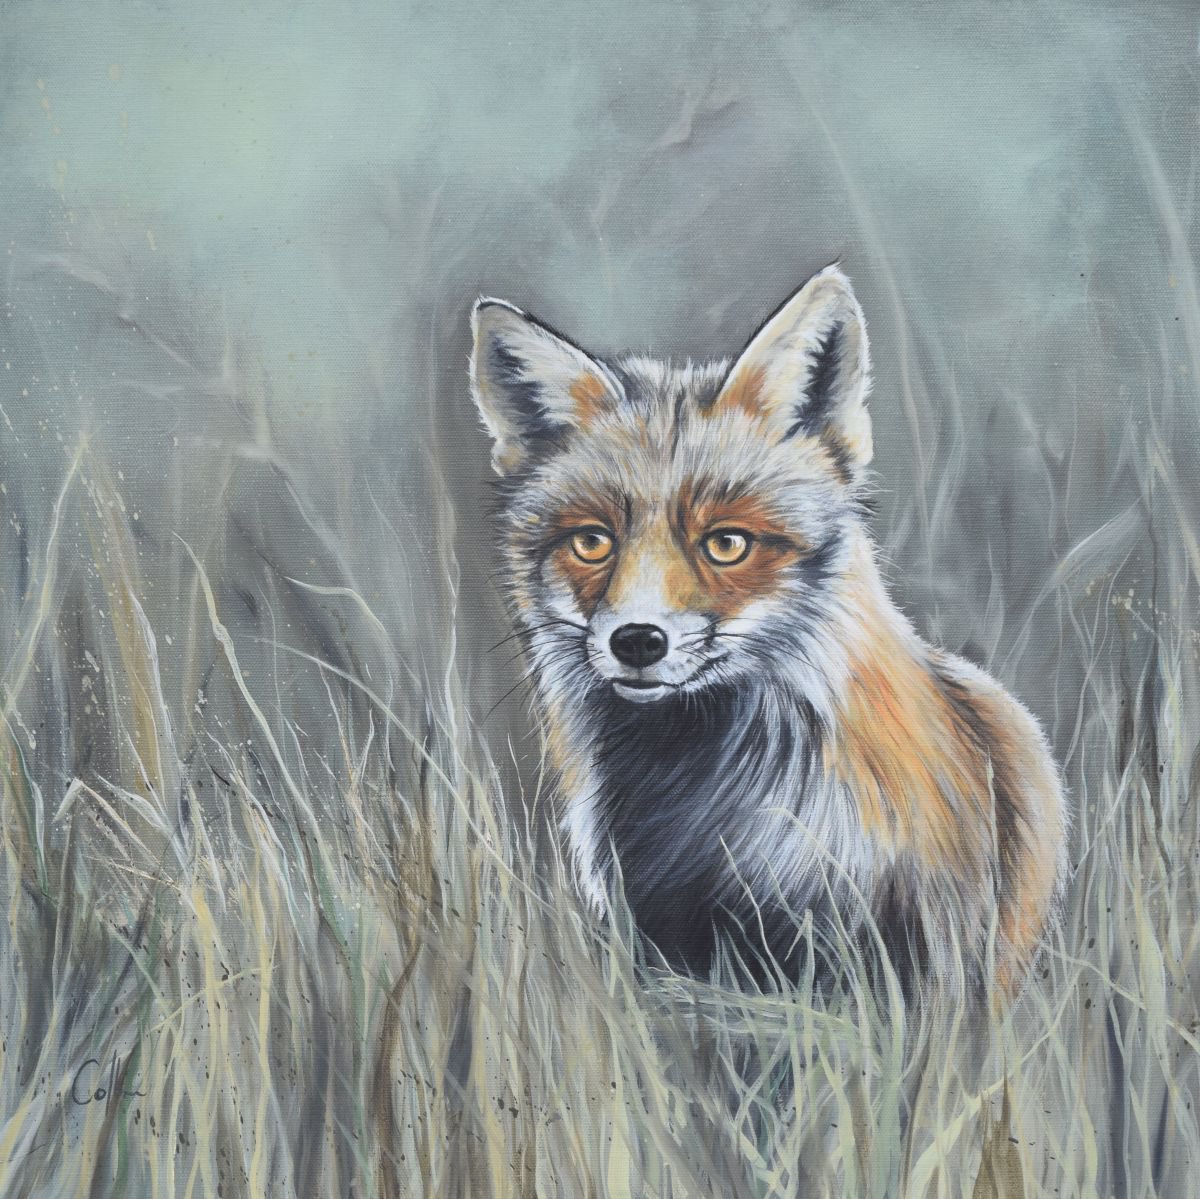 ’Foxy Lady’ by Nicola Colbran